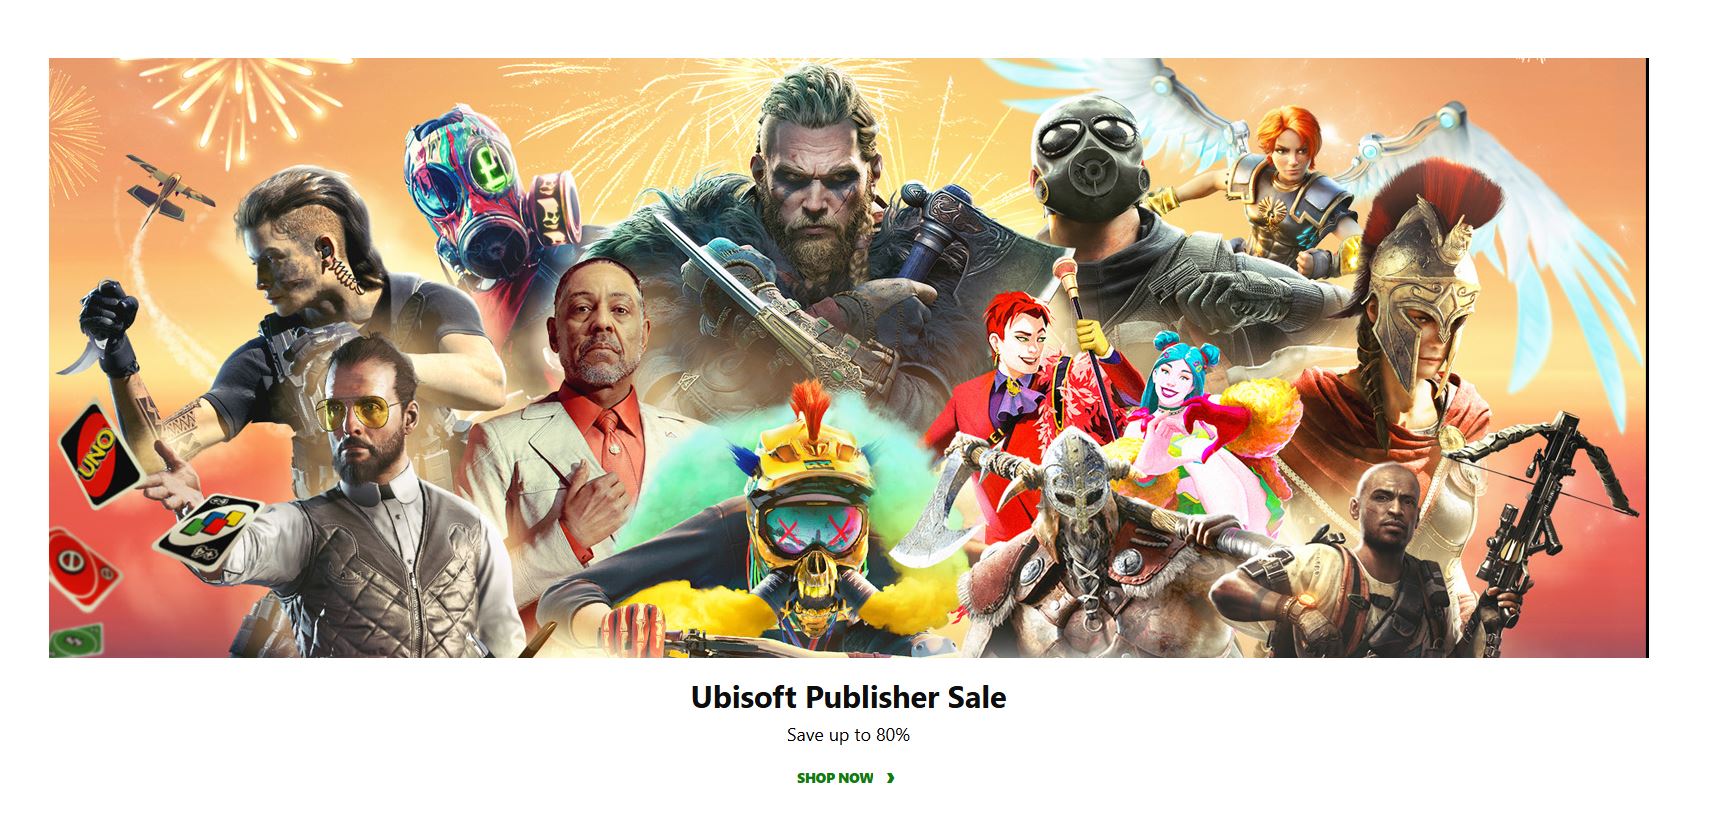 Artiest Speeltoestellen Oxideren Cheap Ass Gamer on Twitter: "Ubisoft Publisher Sale via Xbox.  https://t.co/mlwnoGkKky https://t.co/p2xkbcOFZj" / Twitter